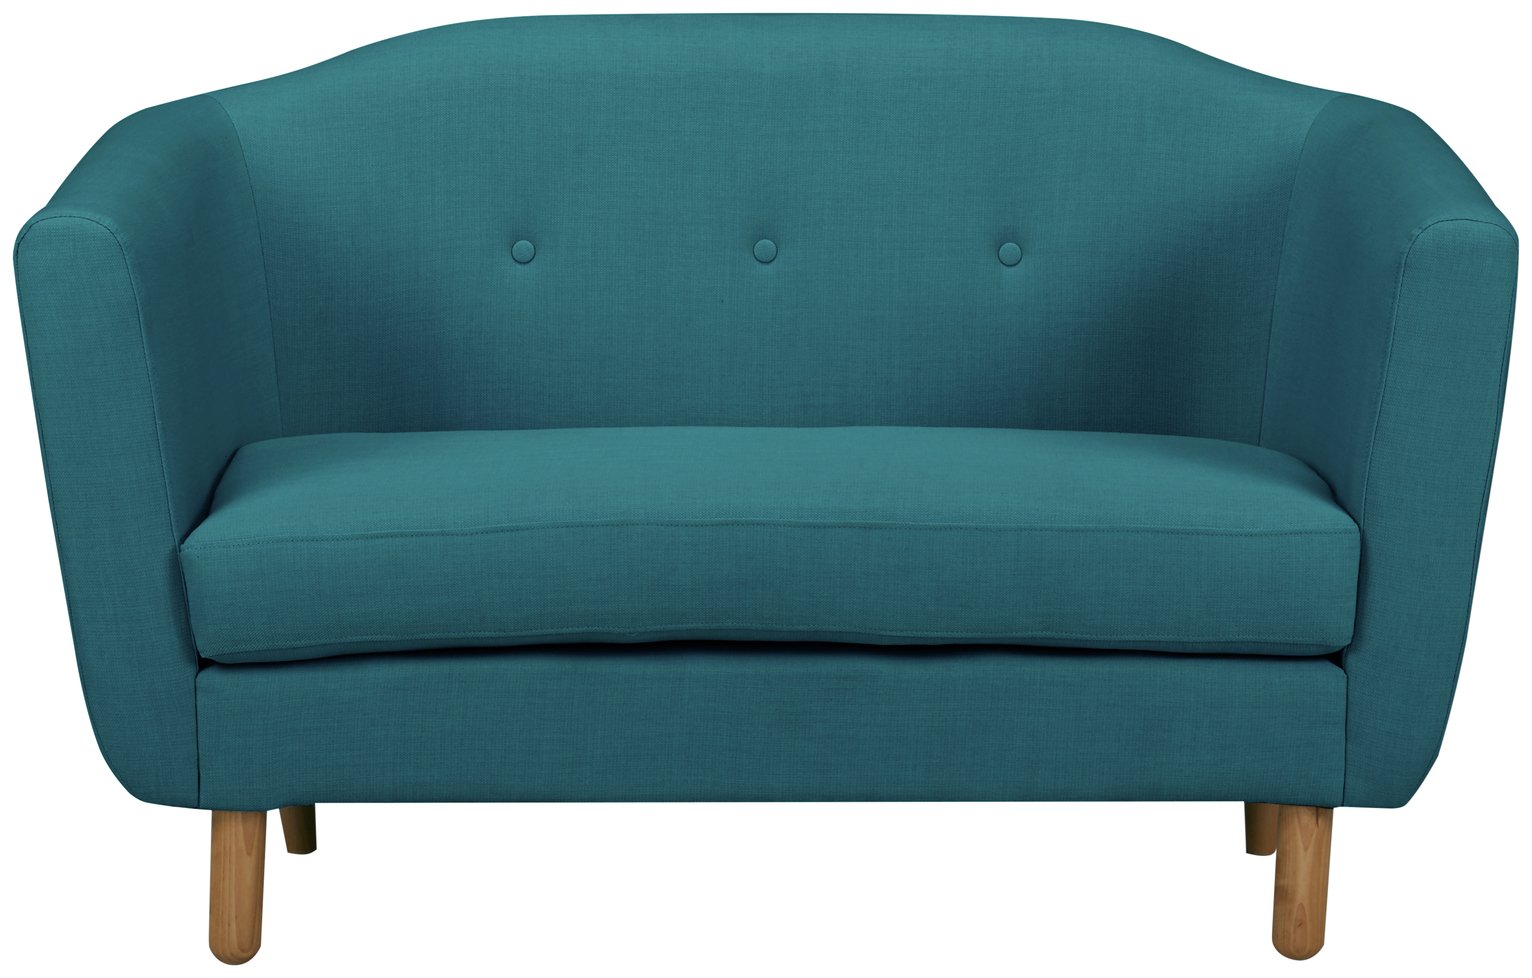 Argos Home Elin 2 Seater Fabric Sofa - Teal